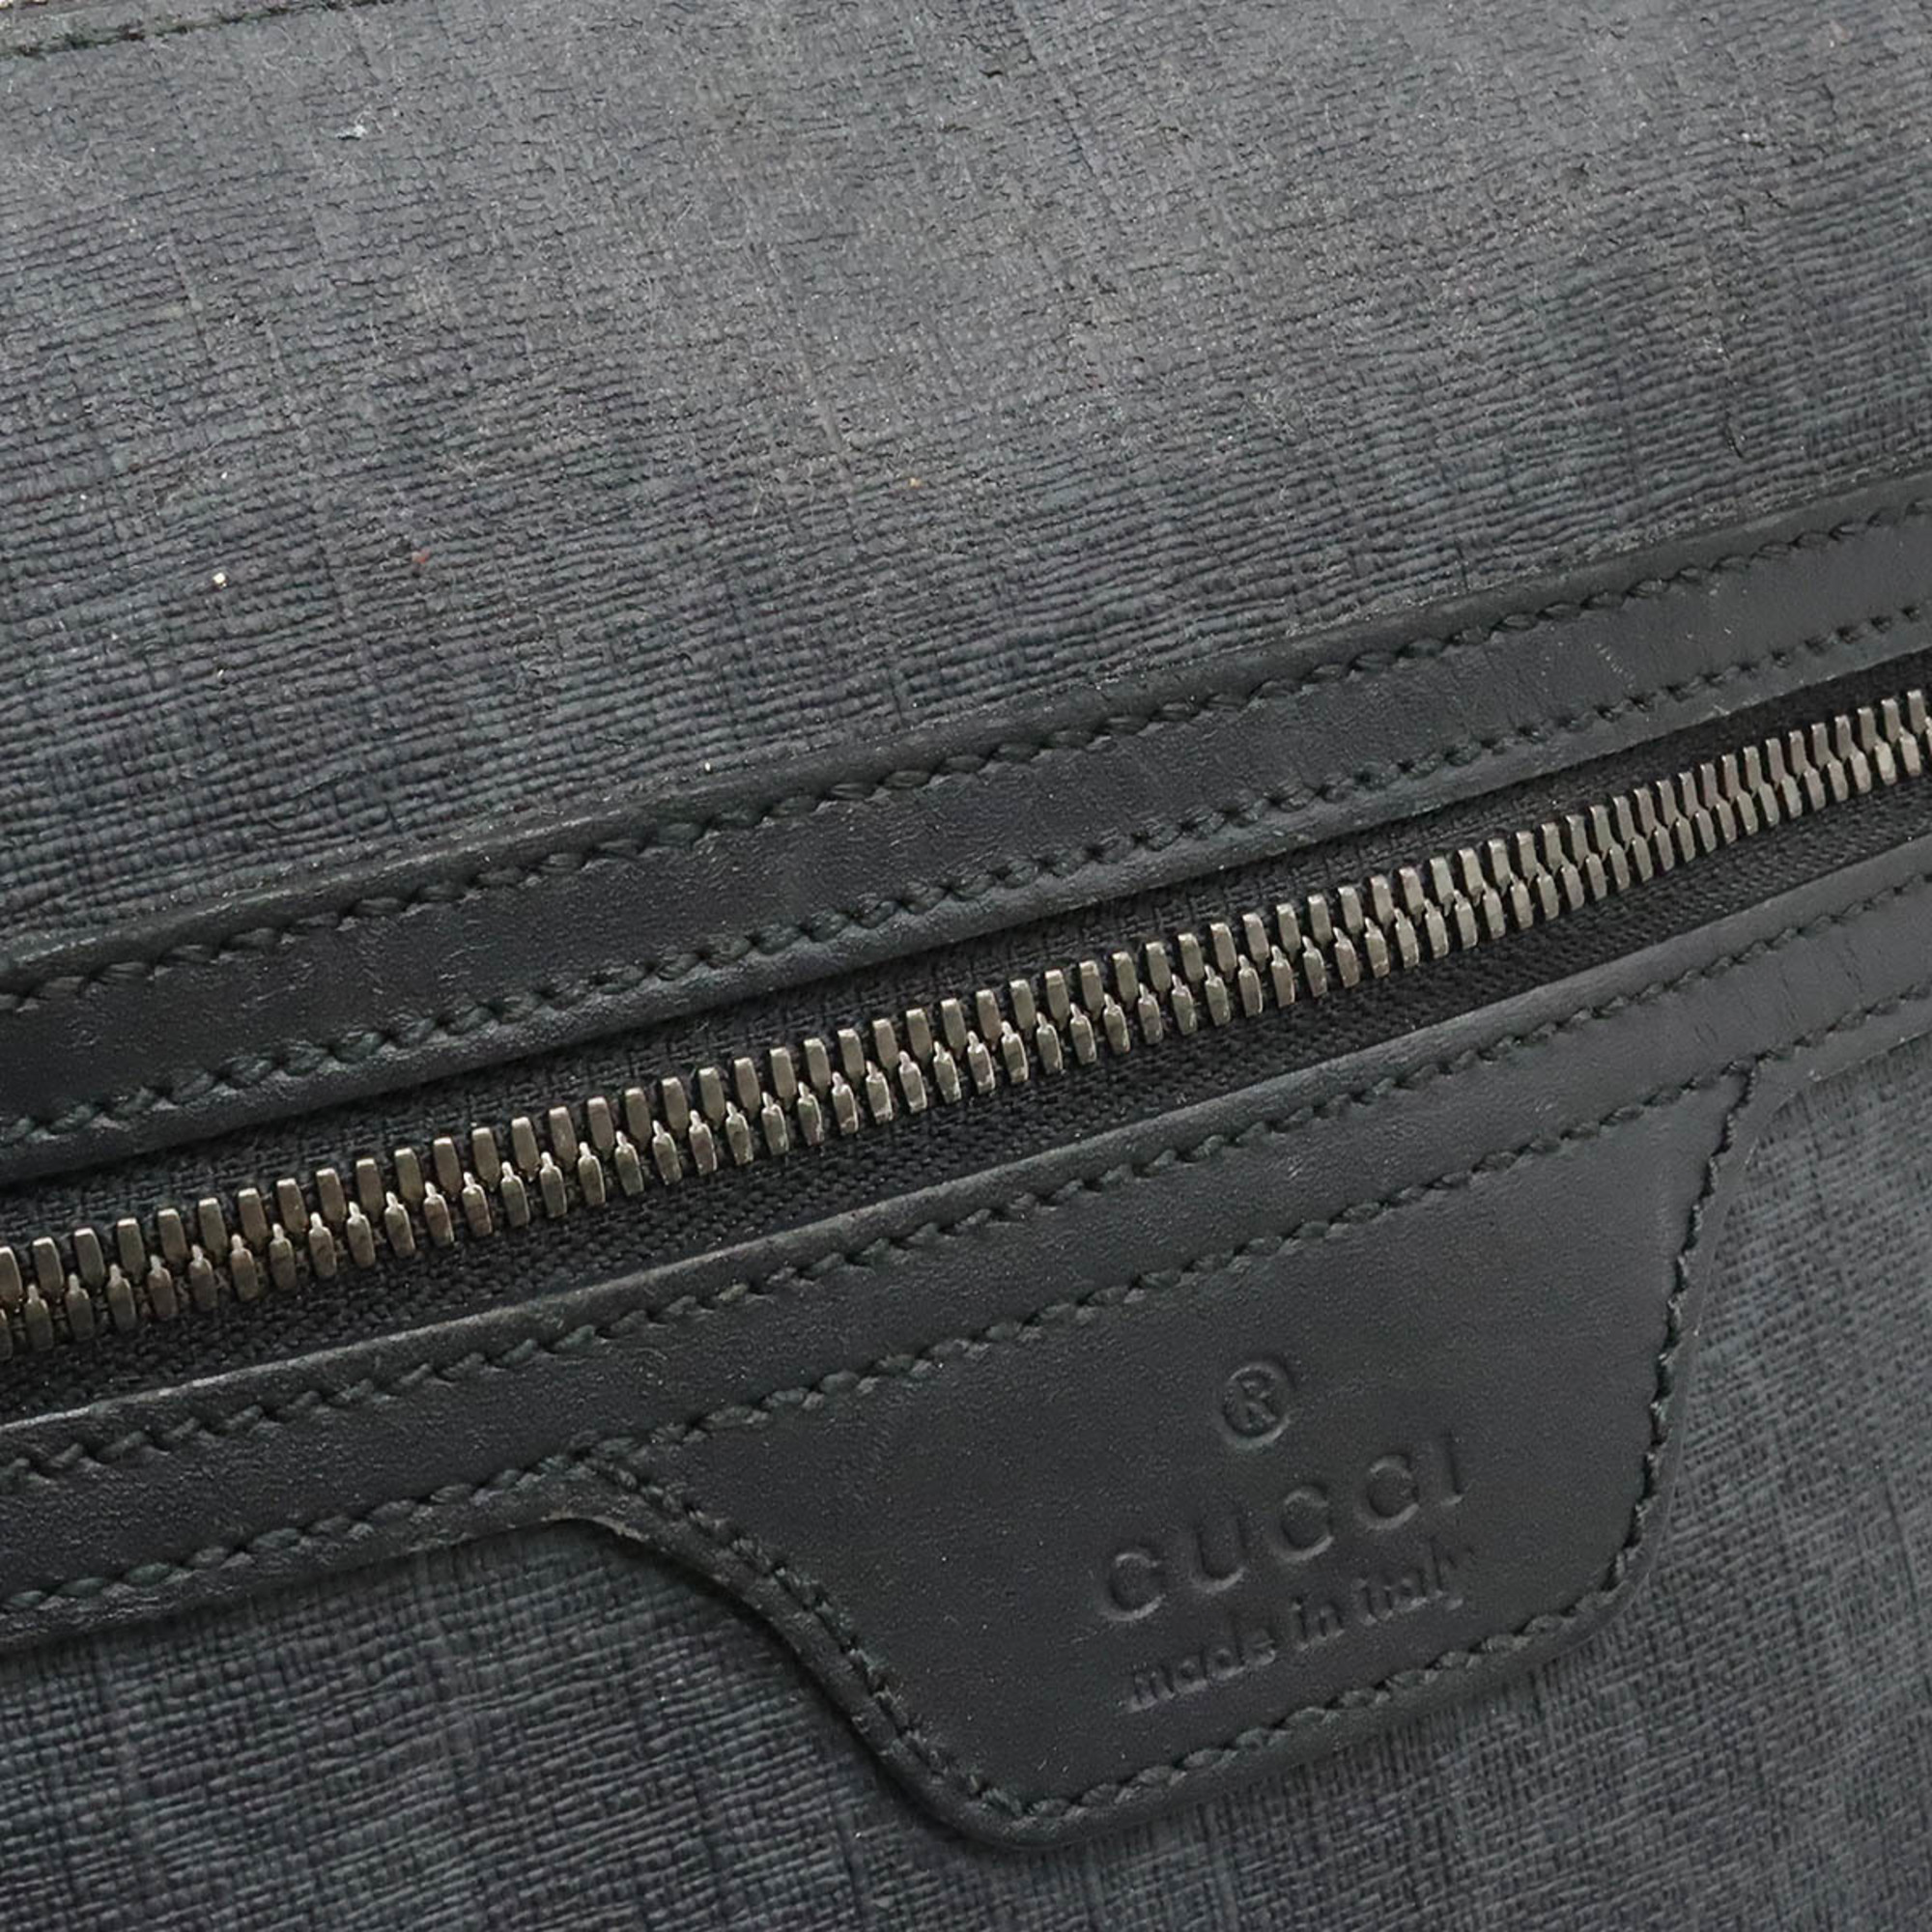 GUCCI GG Supreme Plus Shoulder Bag PVC Leather Black Dark Gray 322279